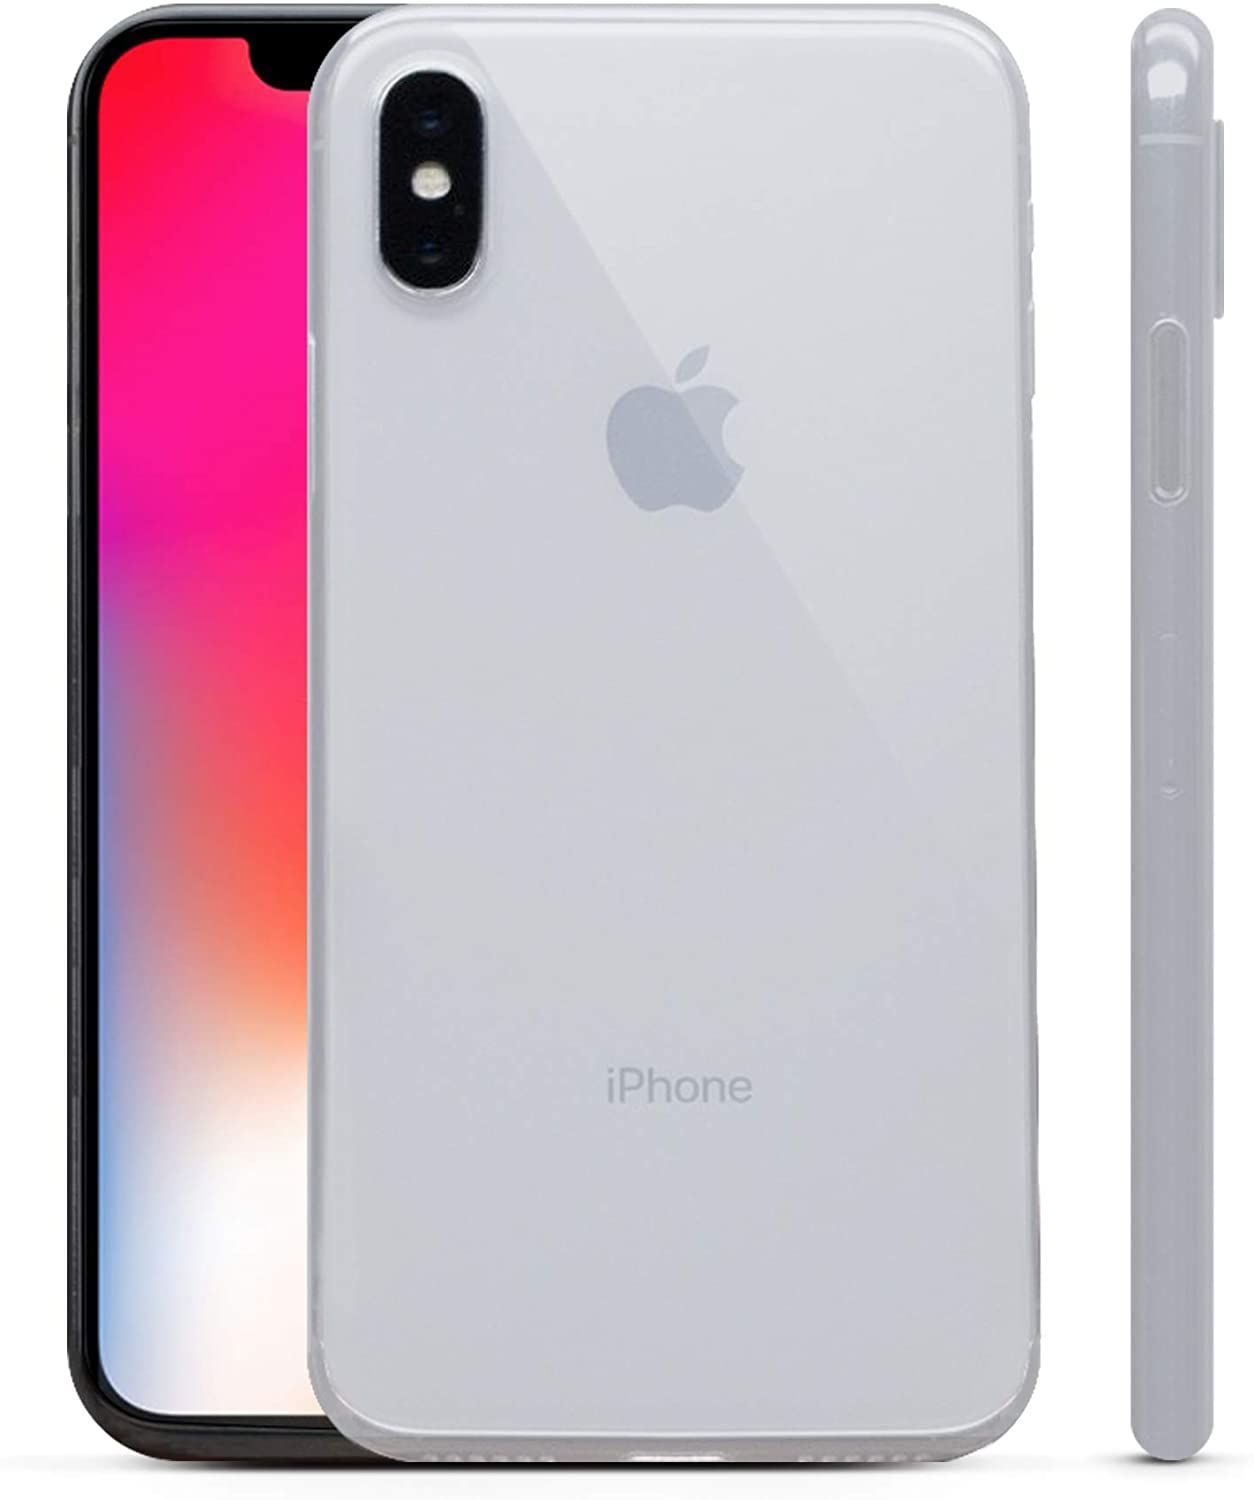 Peel Ultra Thin iPhone X Case